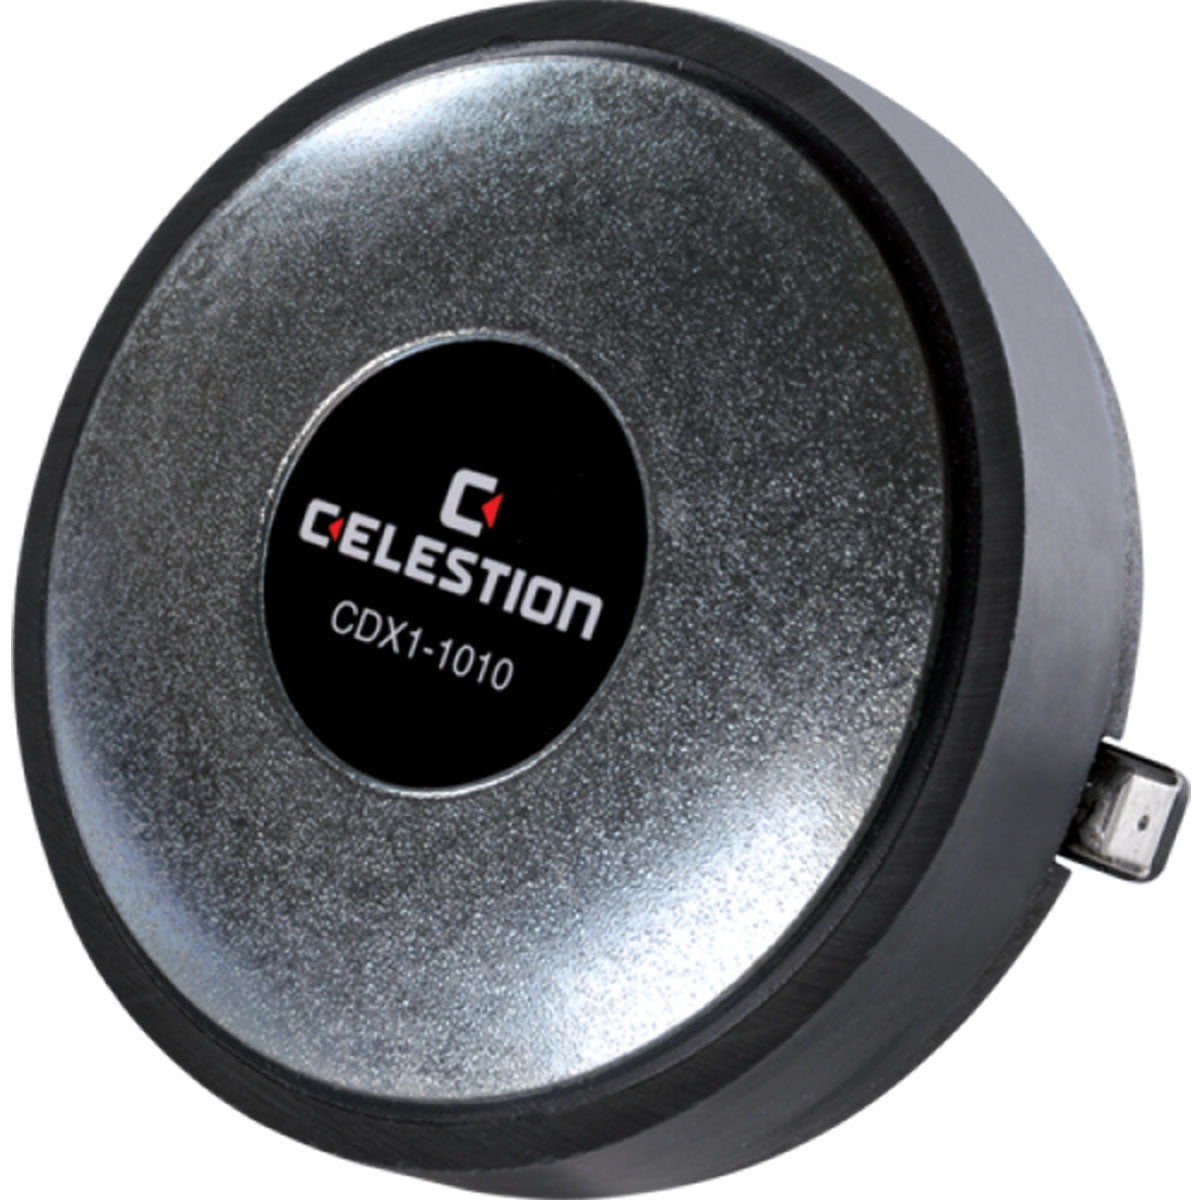 Celestion T5829 CDX1 1010 Ferrite Magnet Compression Driver 1 Inch 20W HF 8OHM